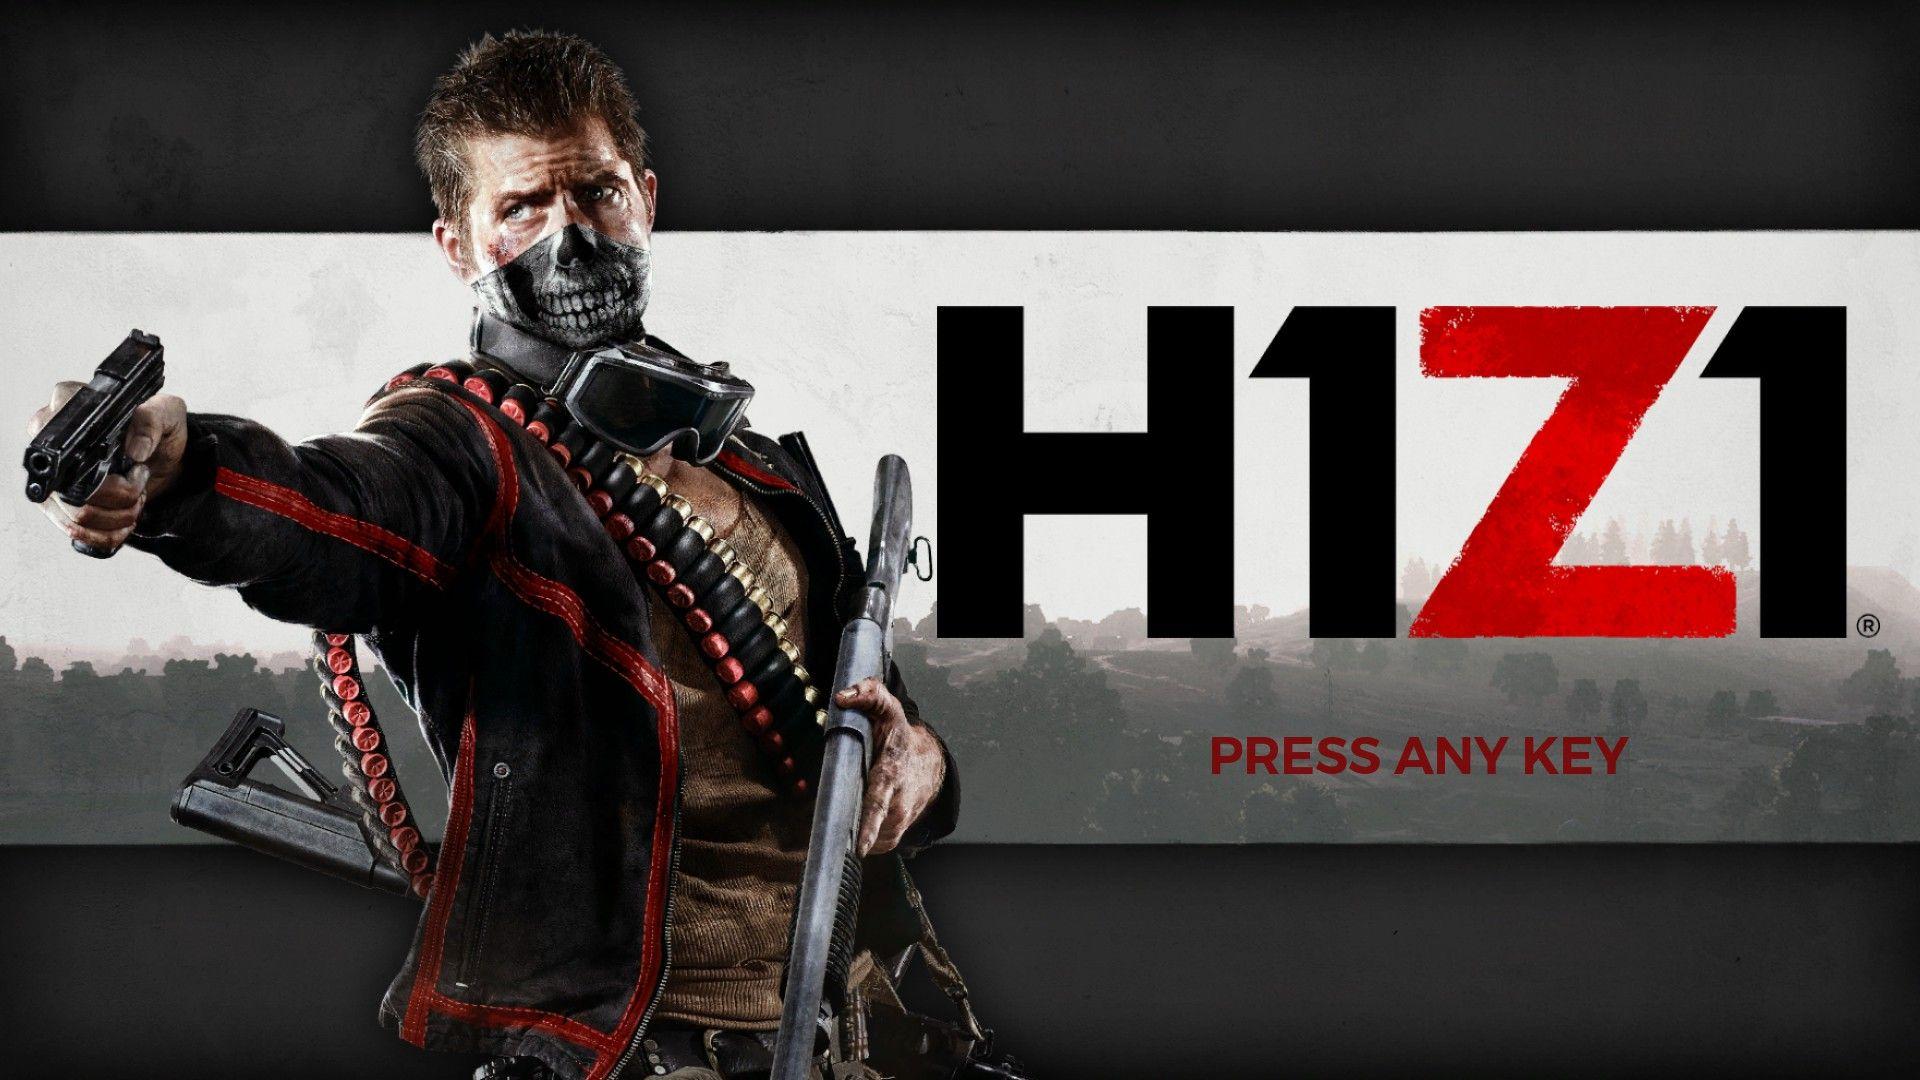 H1Z1 Logo - H1Z1 unveils new logo, drops King of the Kill subtitle. - H1Z1 ...